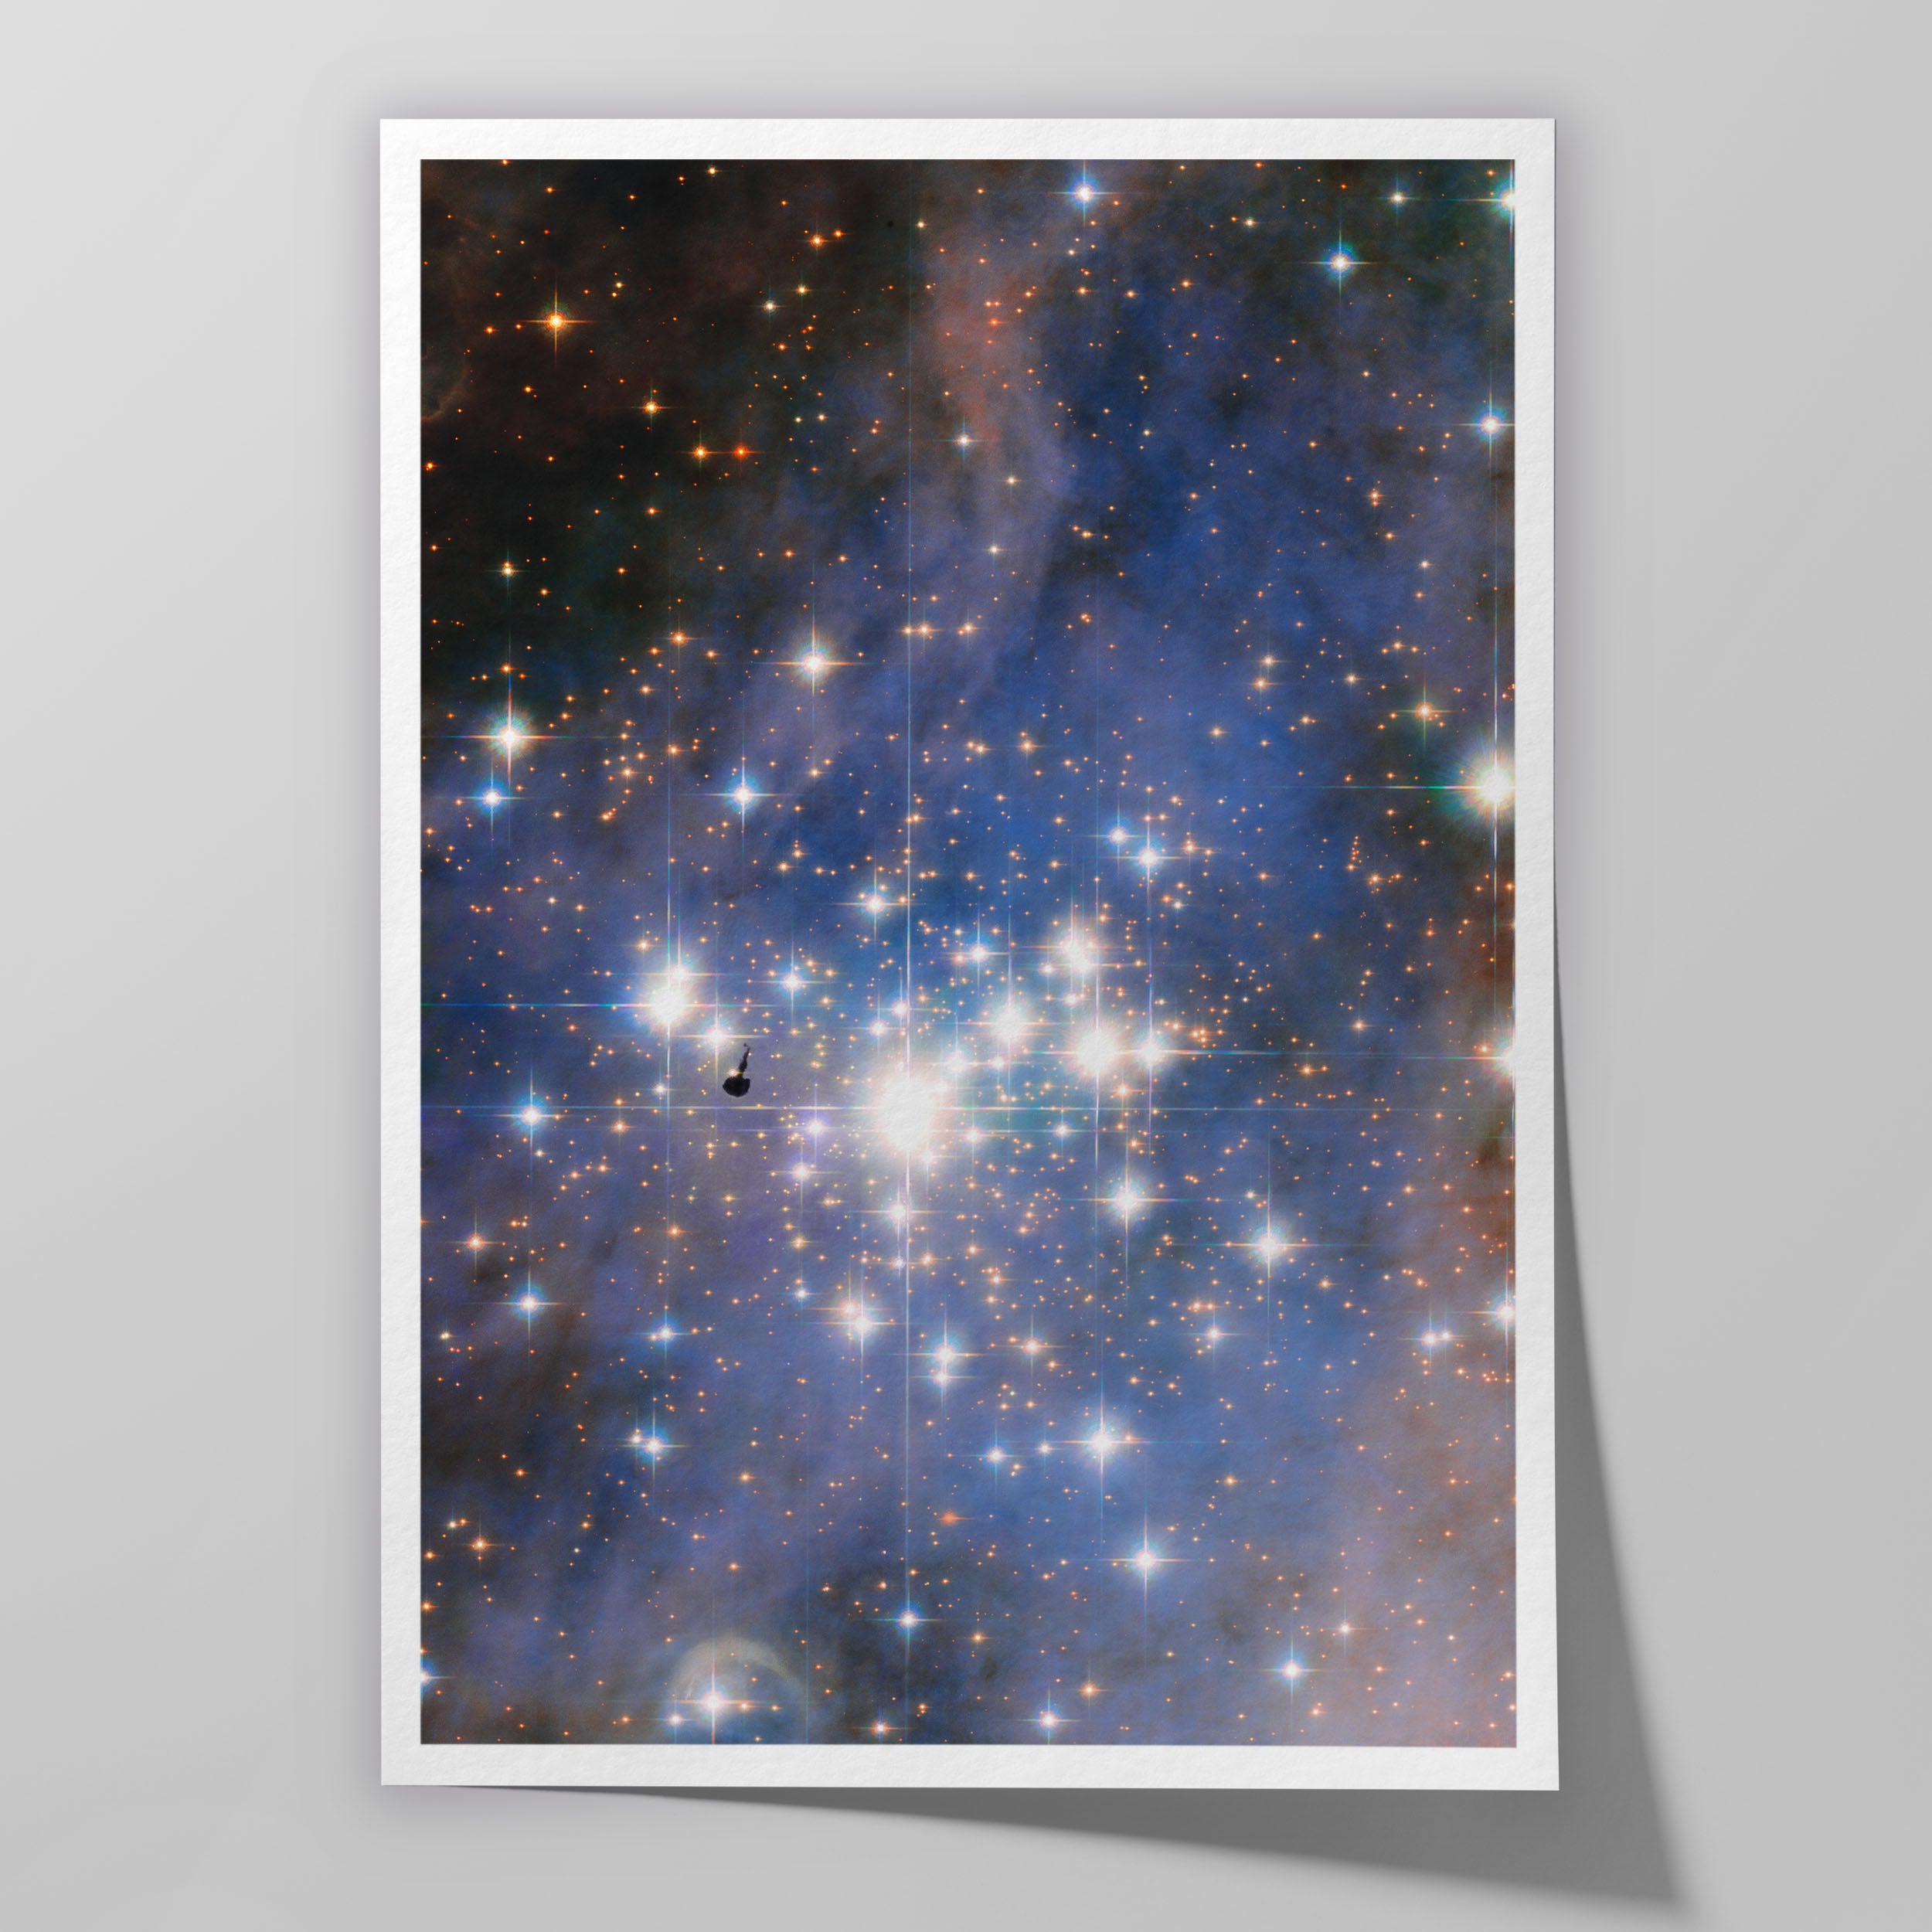 Trumpler 14 Star Cluster